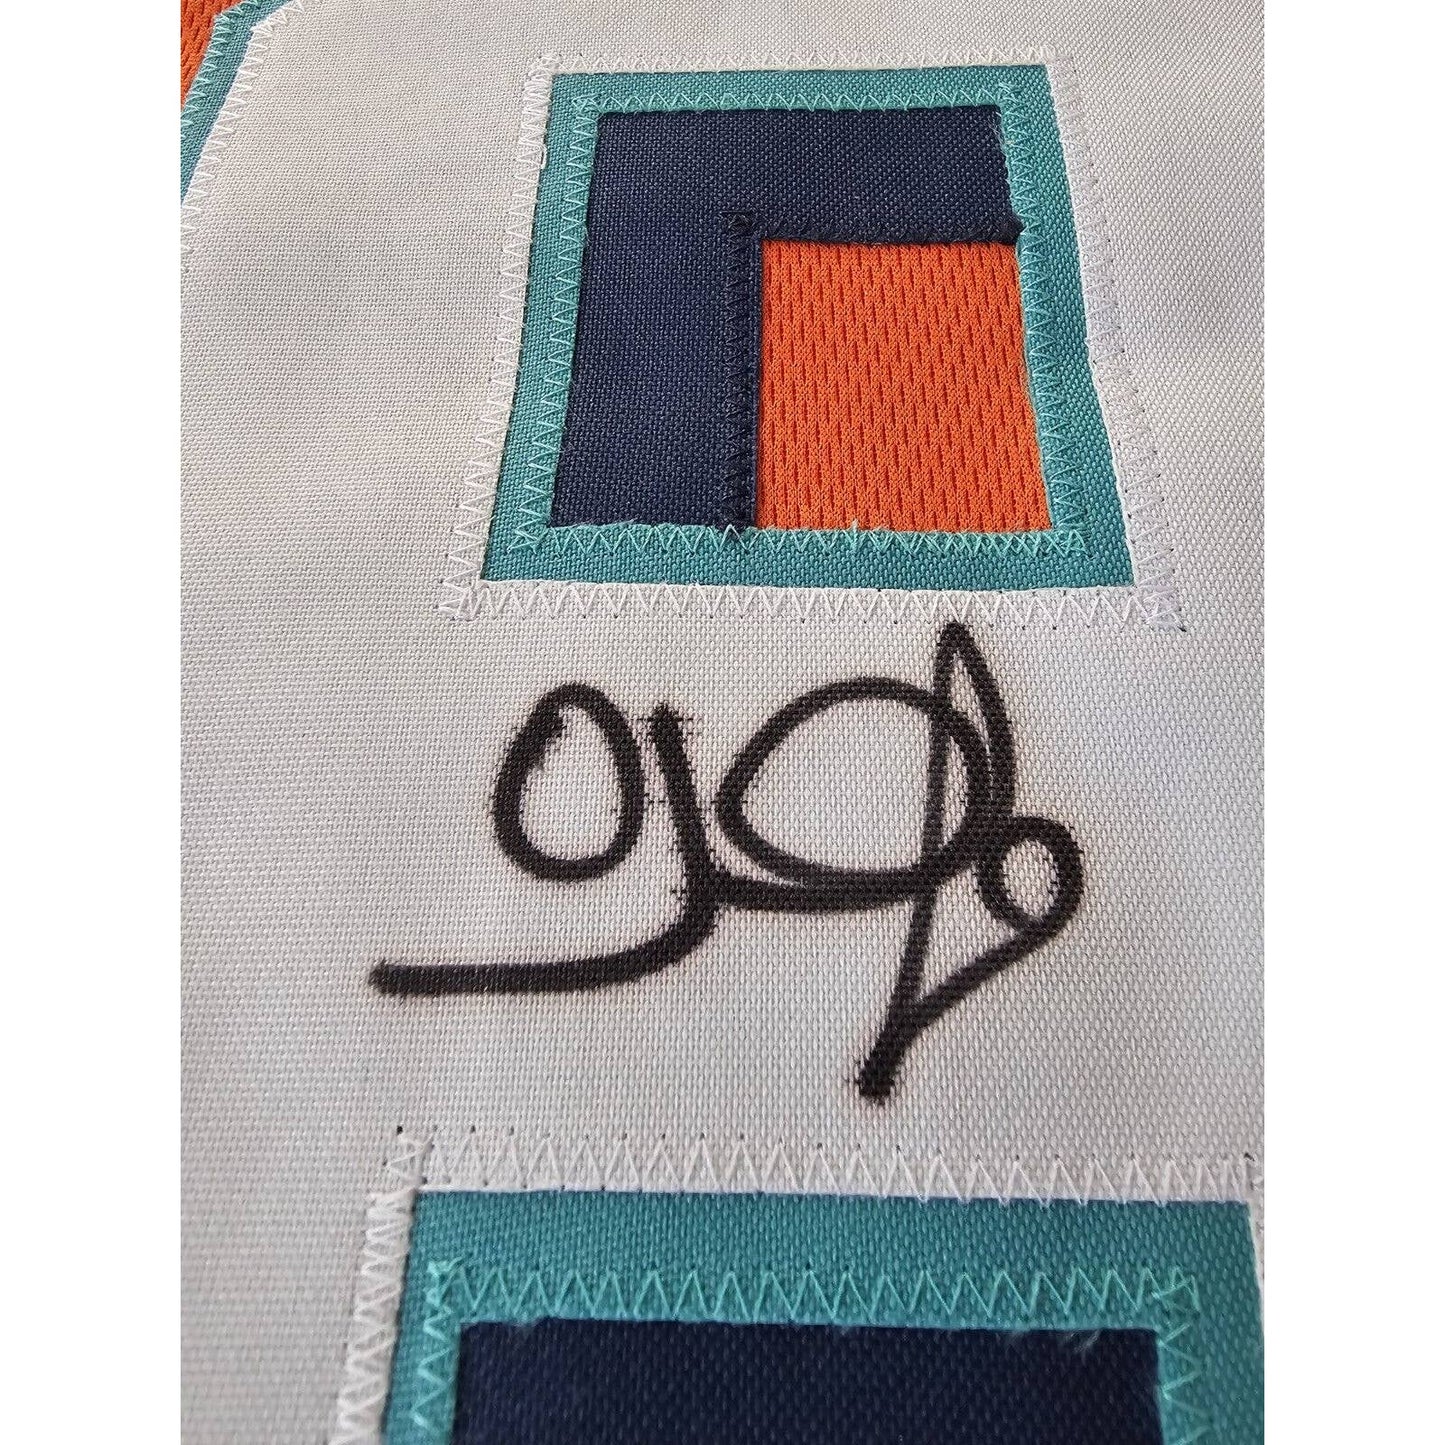 OJ McDuffie Autographed/Signed Jersey JSA Sticker Miami Dolphins O.J.